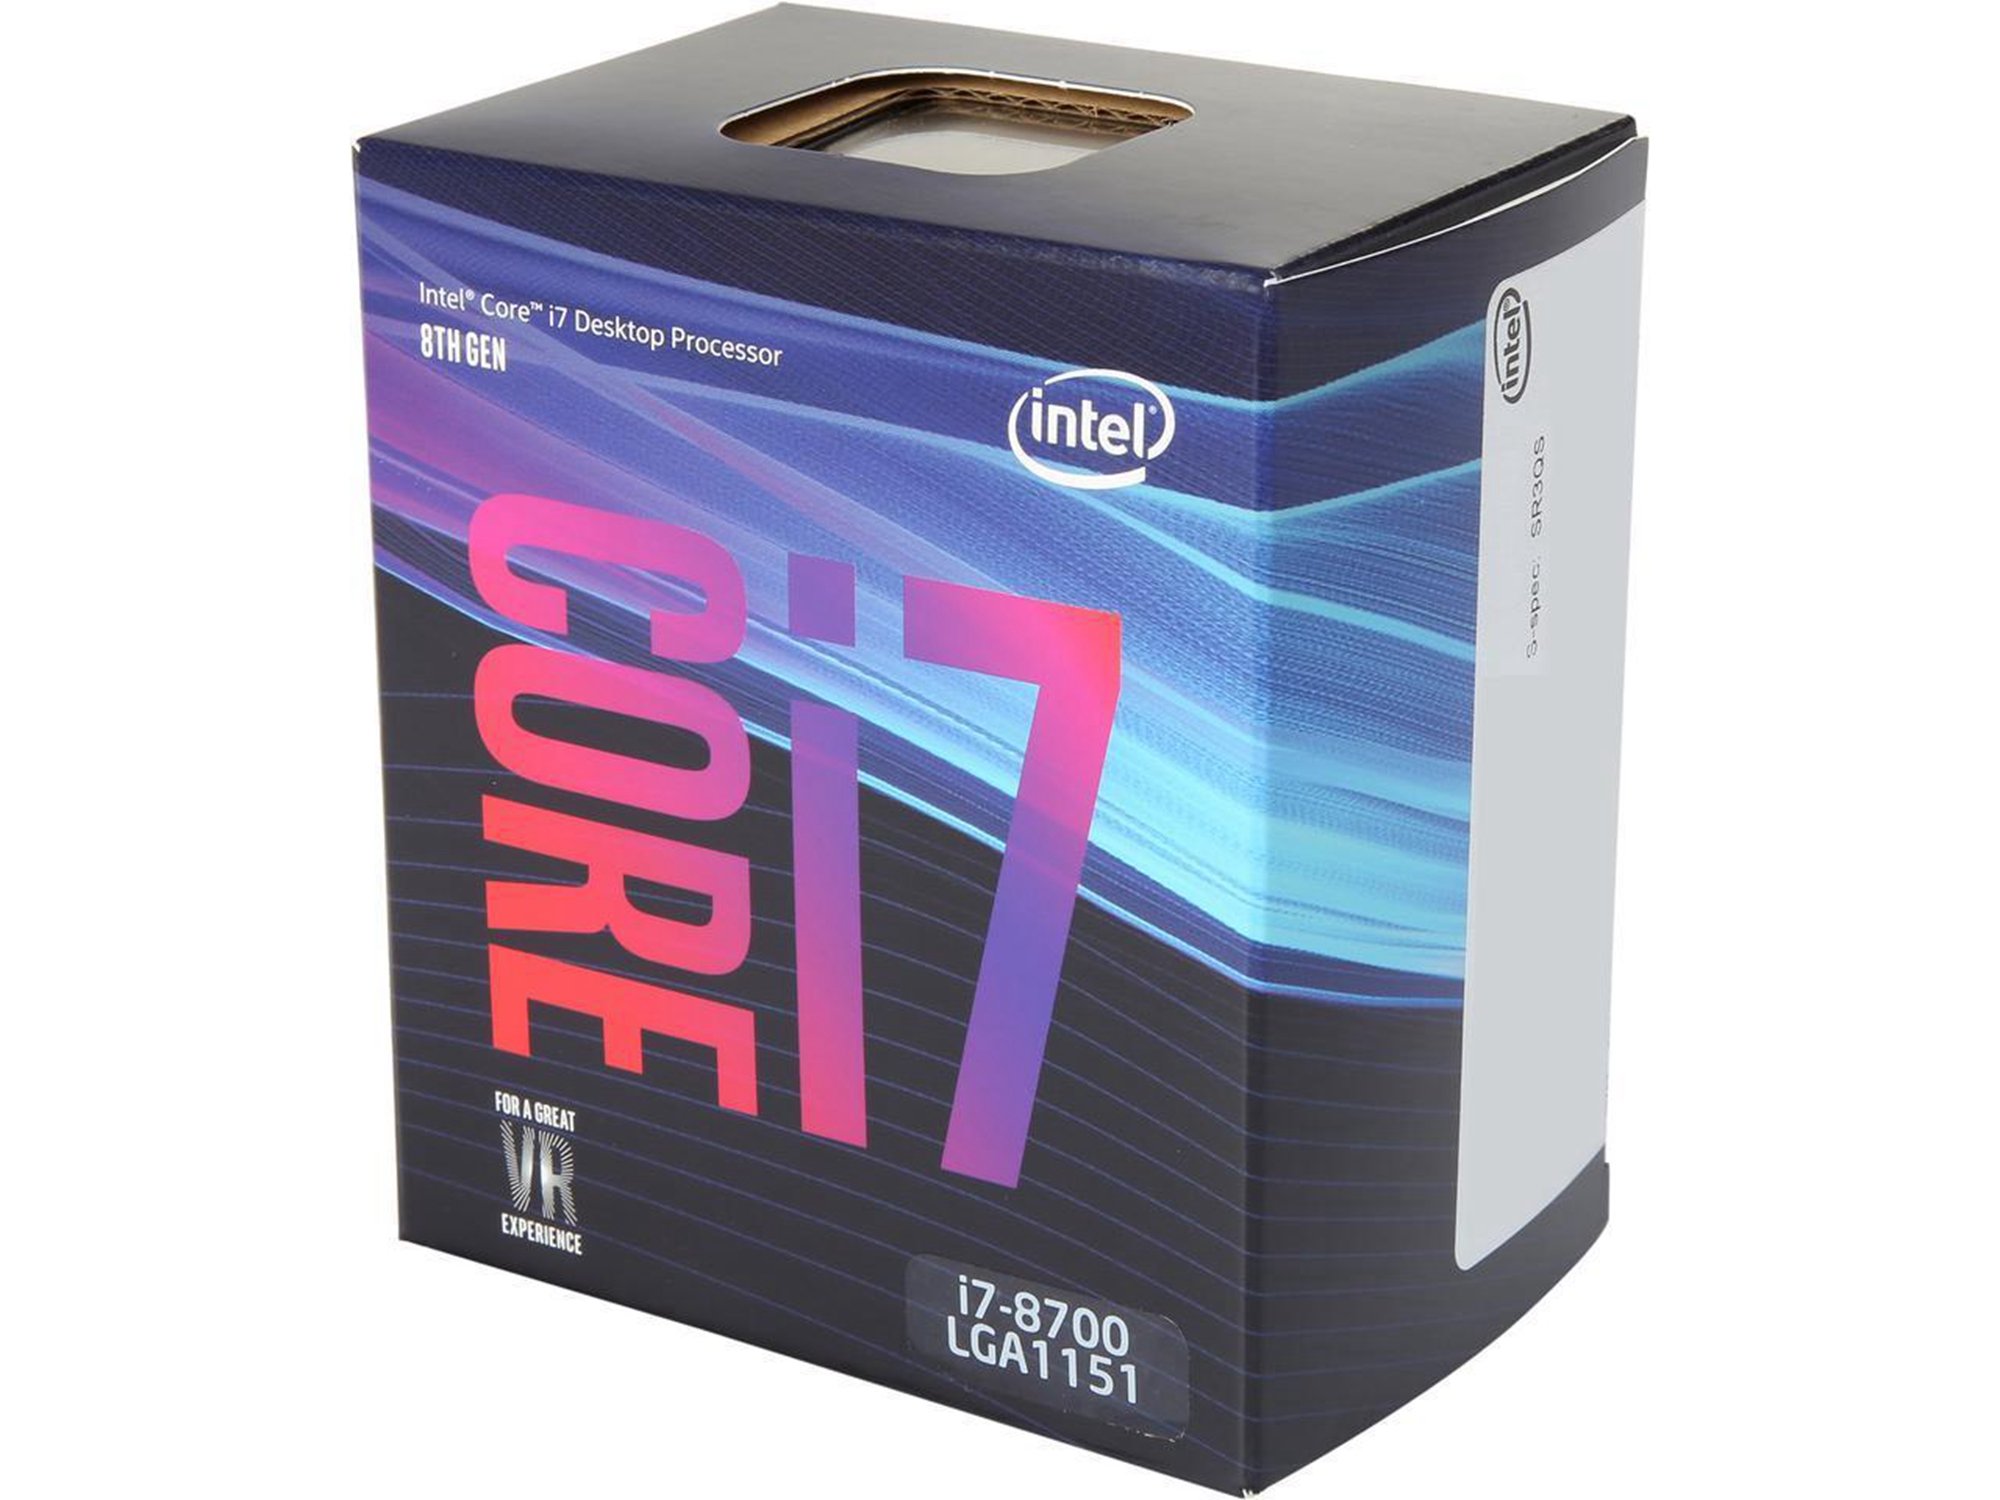 Intel Core i7 8700 6 Core LGA 1151 3.2Ghz CPU Processor | PCByte